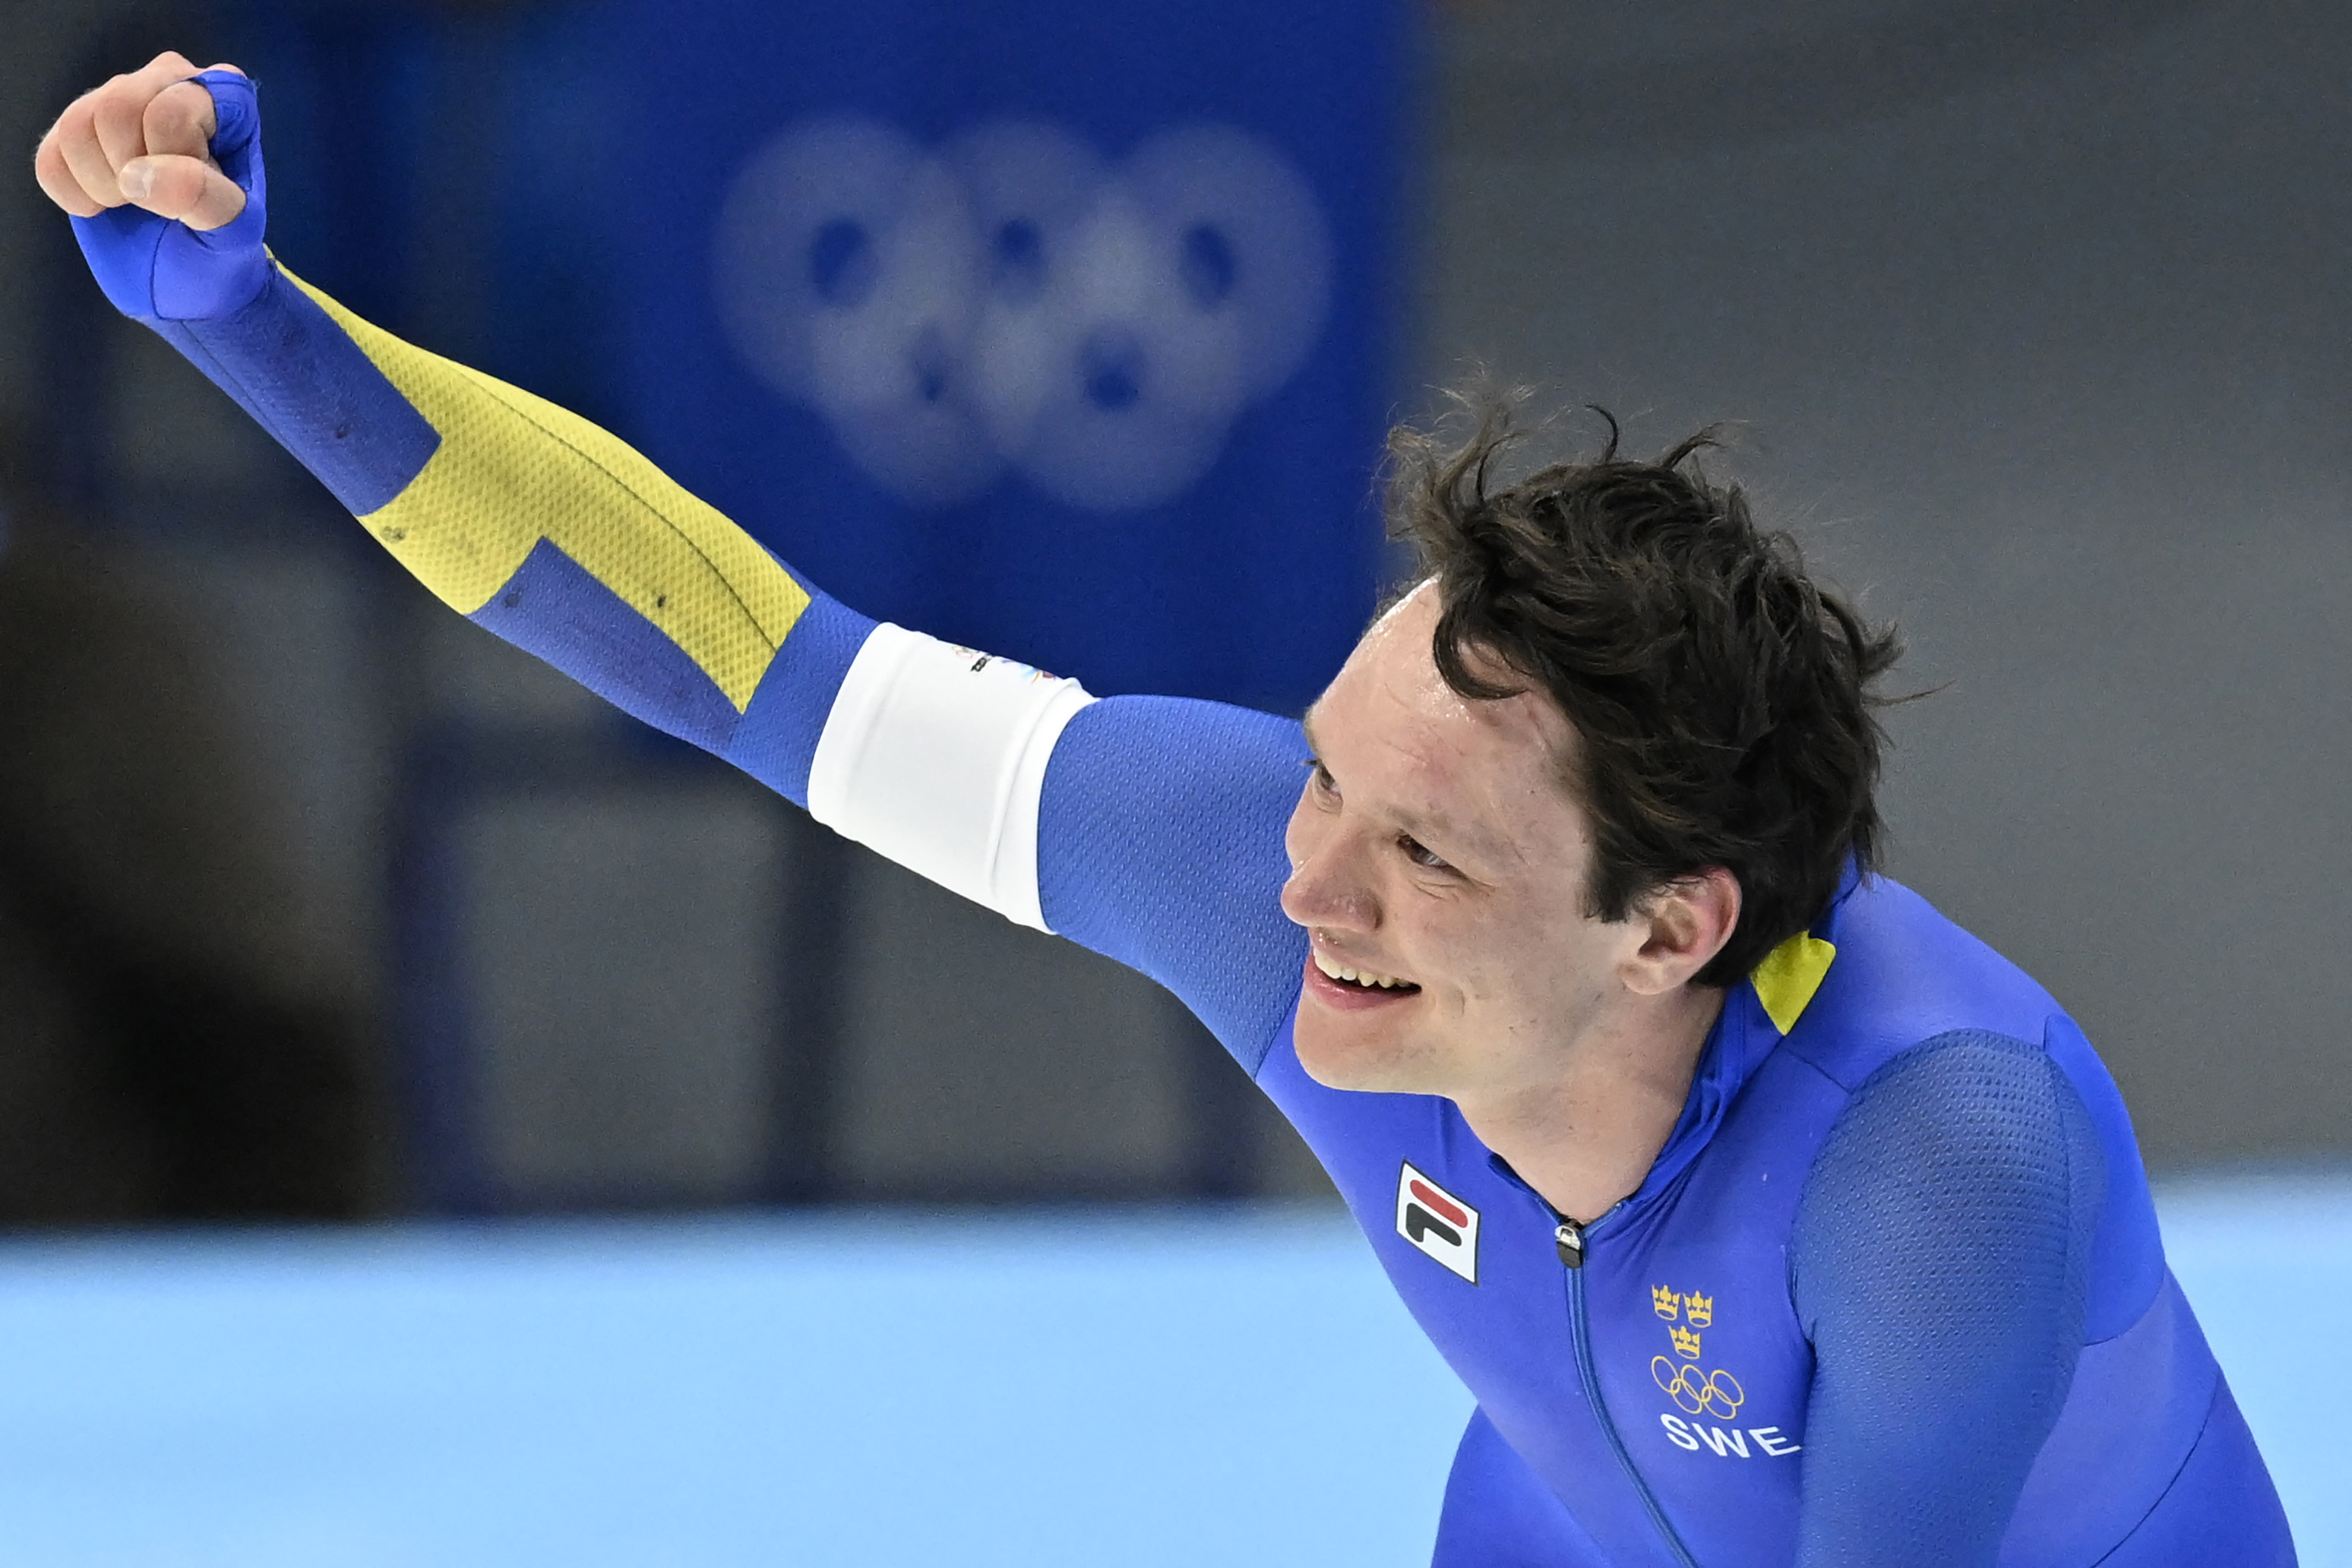 Sweden's Nils Van Der Poel celebrates winning the men's speed skating 5000m event on February 6.